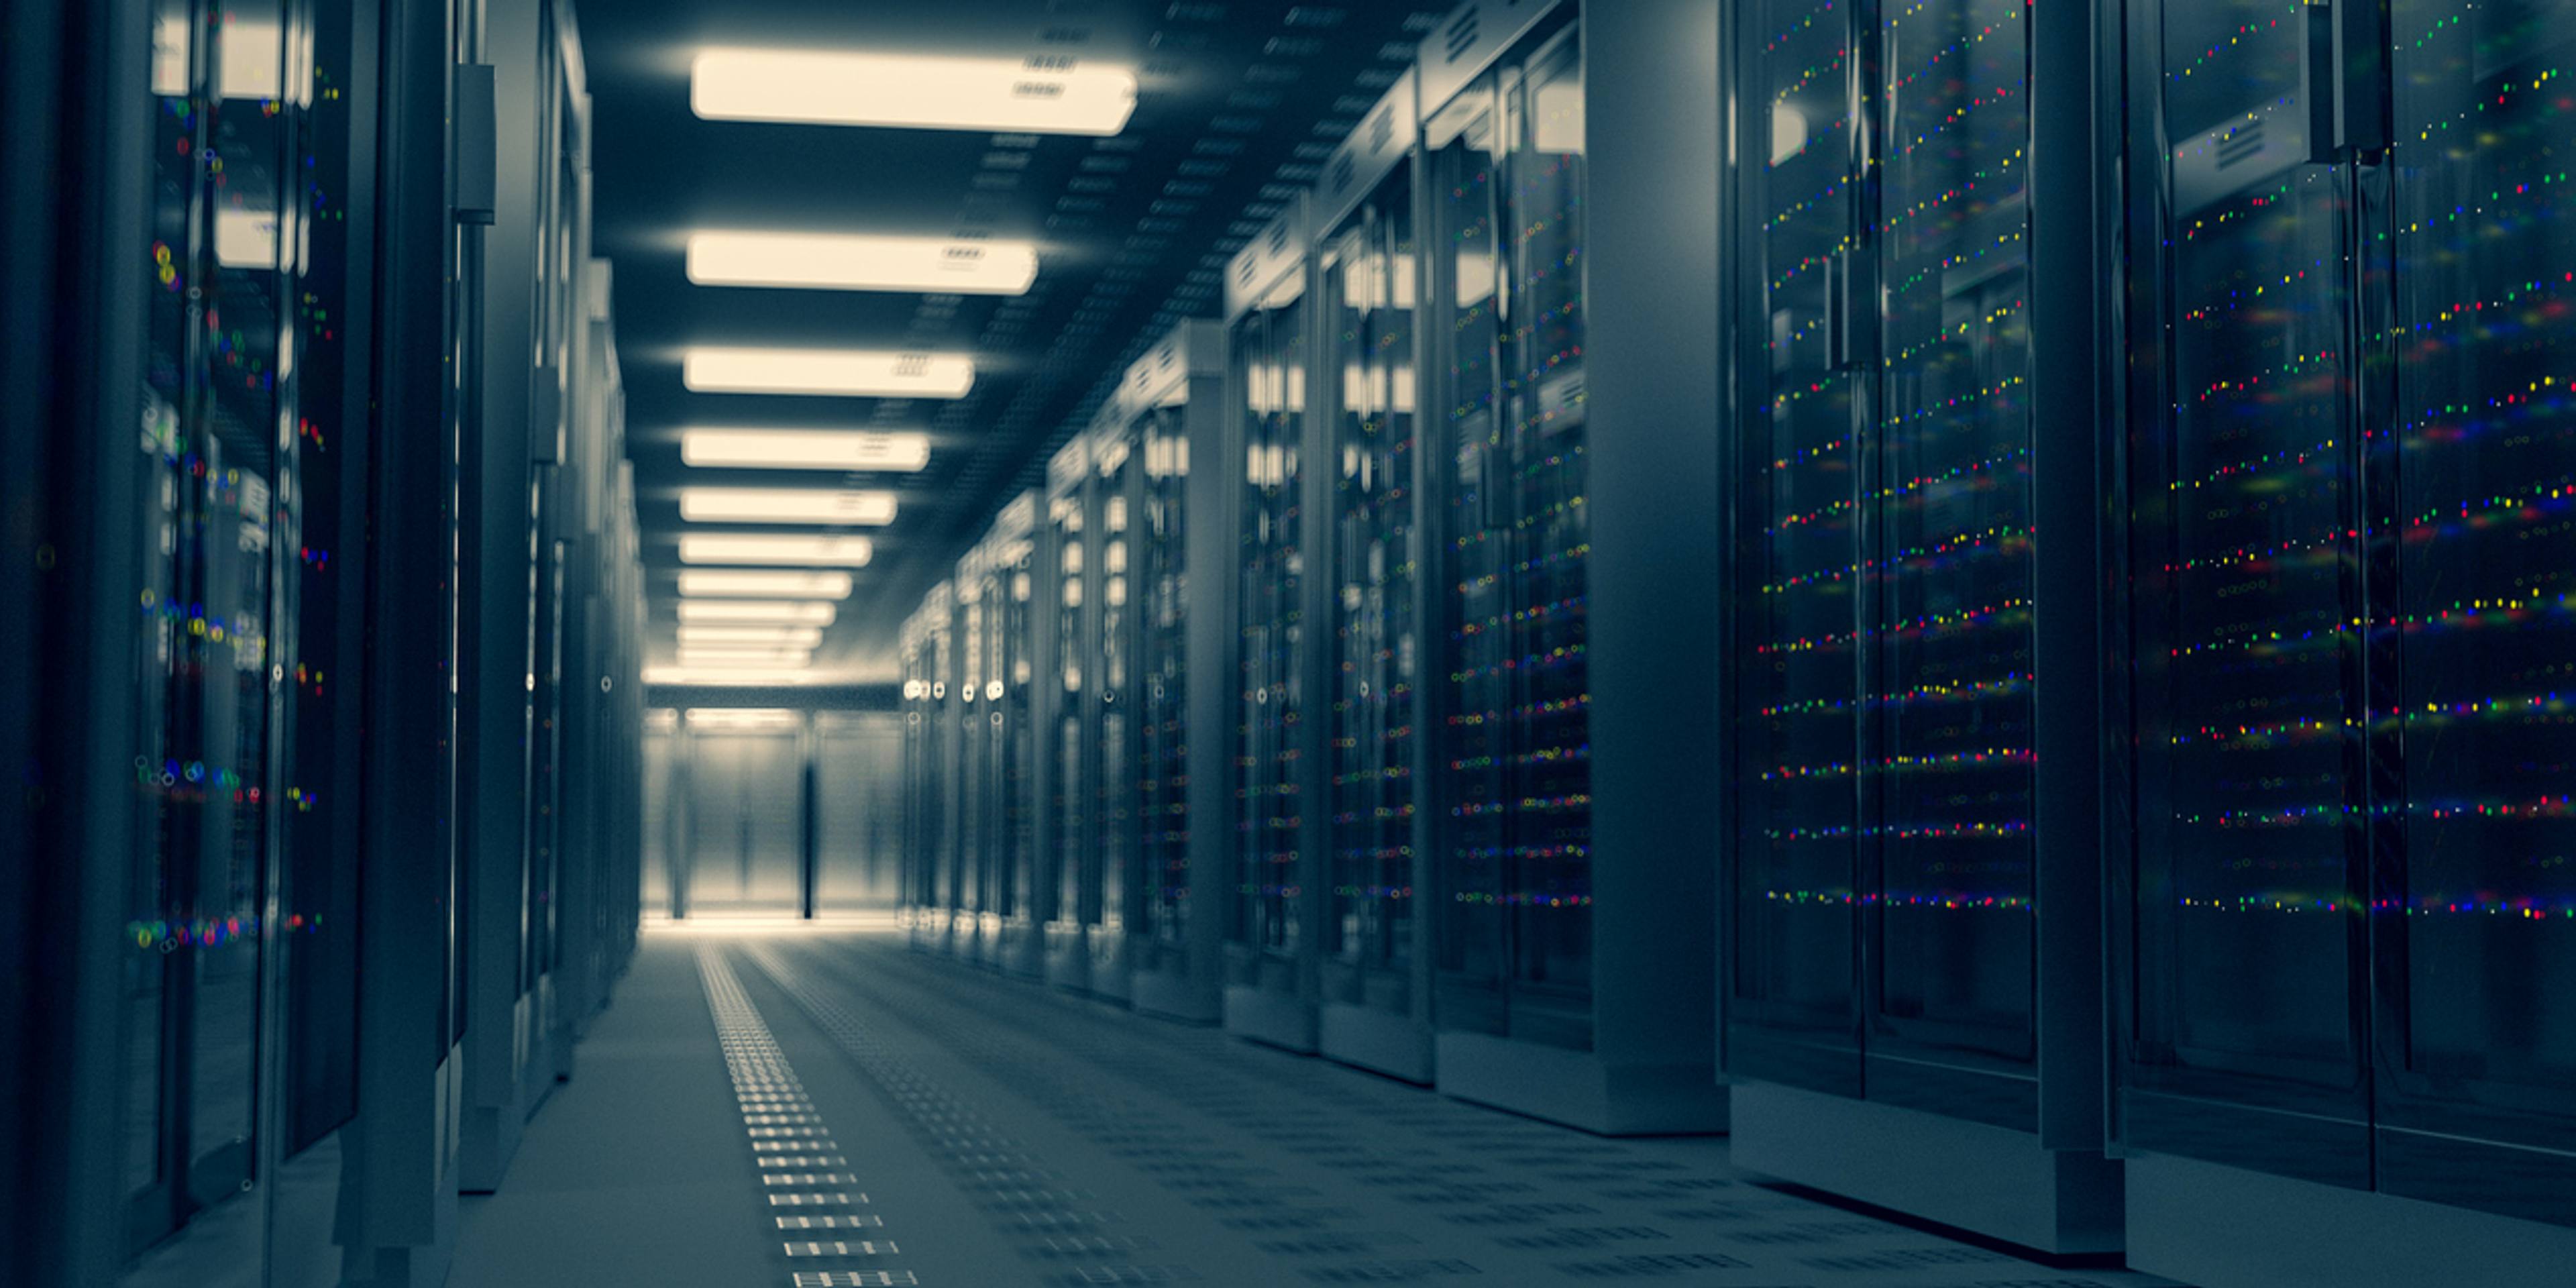 Server racks glowing in a dark data center